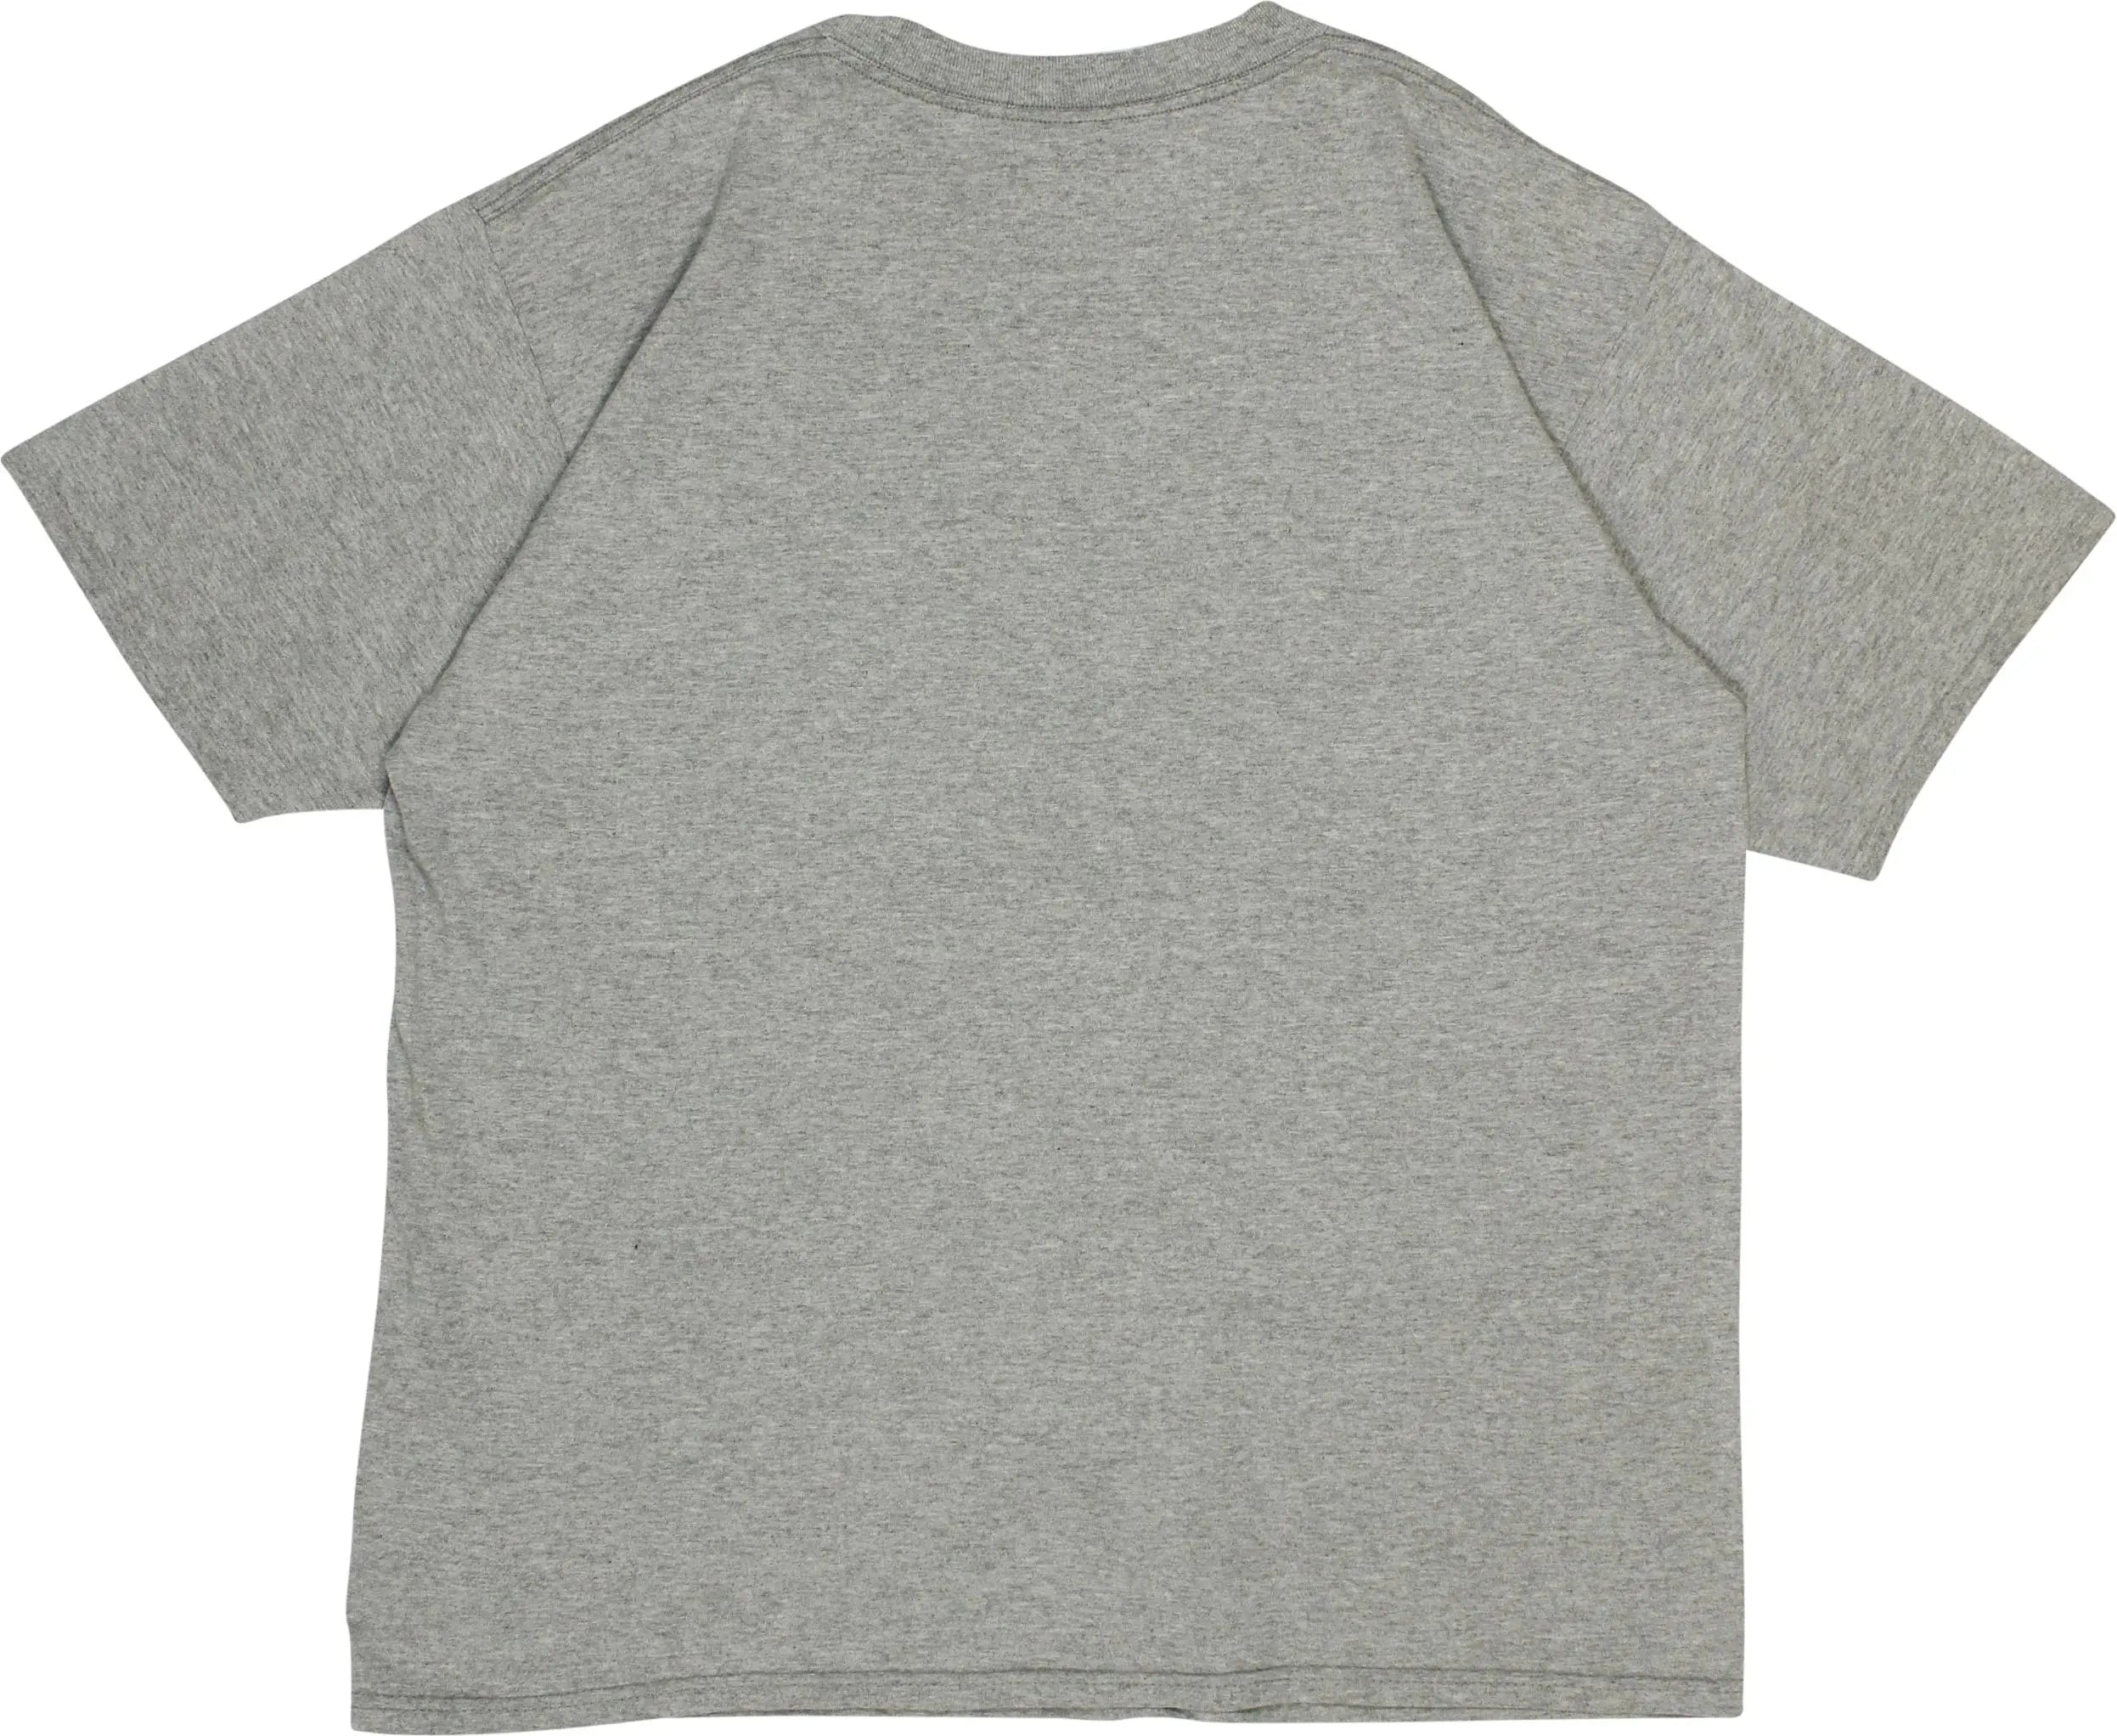 Gildan - 90s University T-Shirt- ThriftTale.com - Vintage and second handclothing